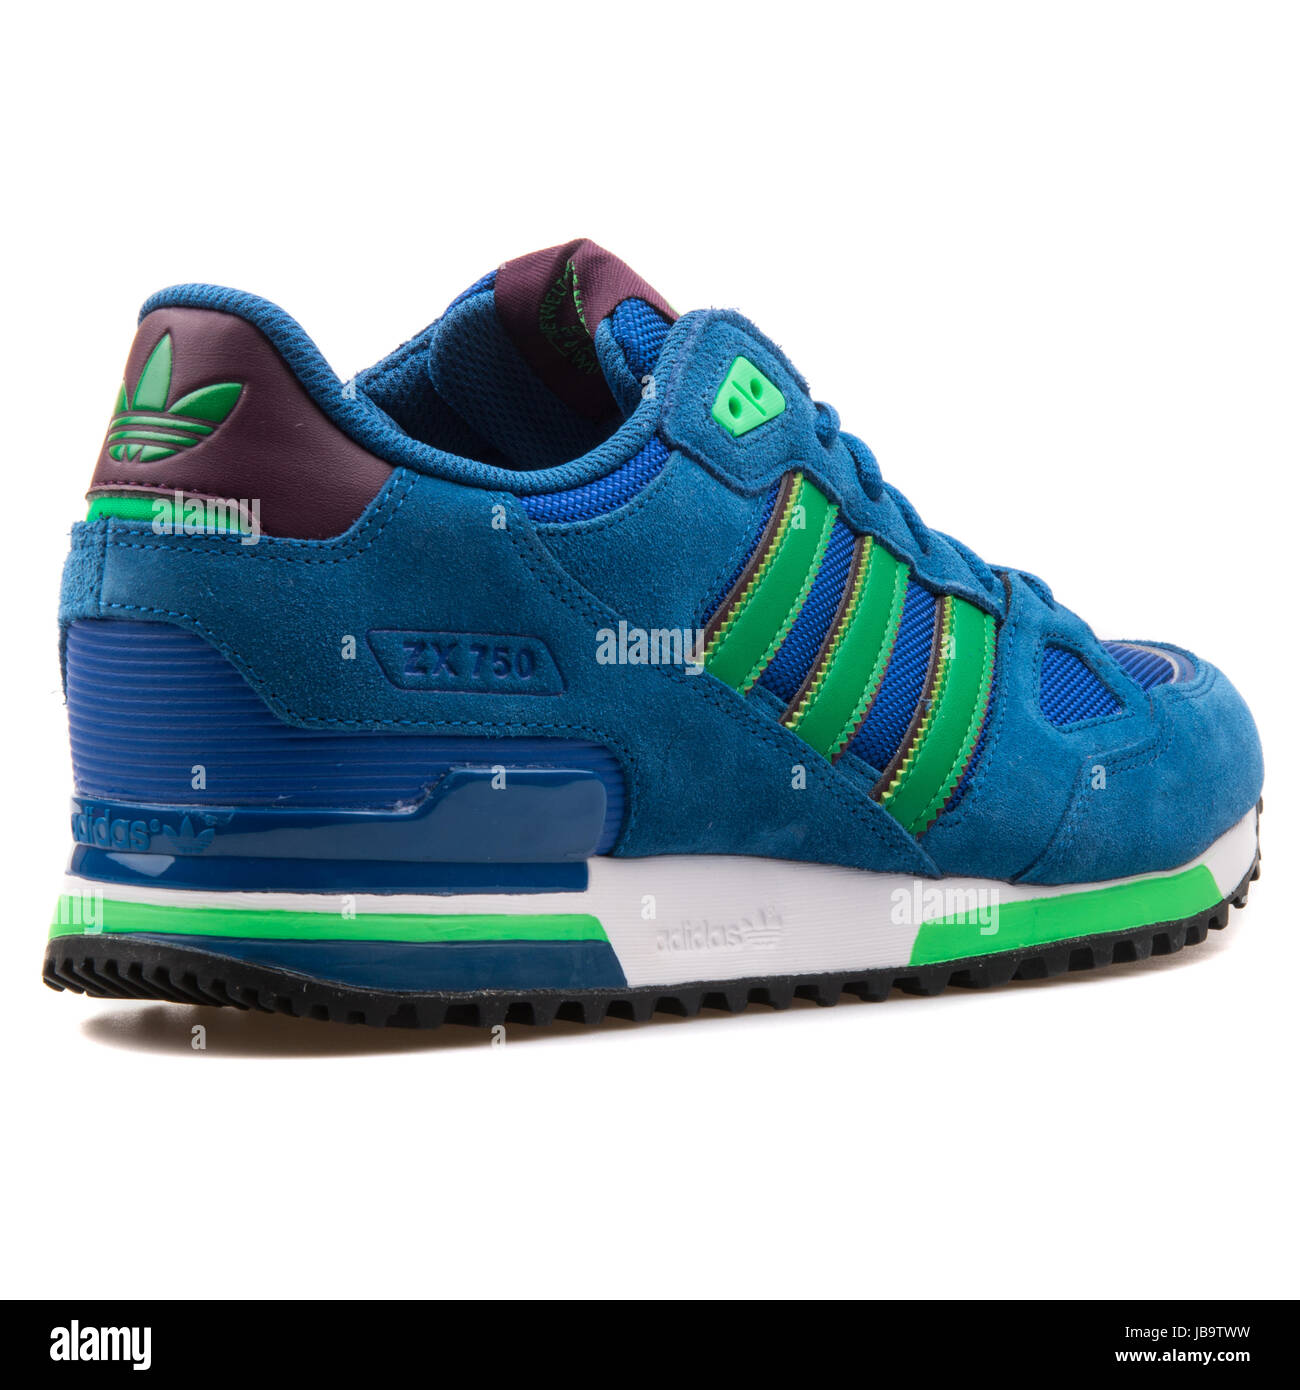 Adidas ZX 750 Blu e Verde uomini Sport Sneakers - B24857 Foto stock - Alamy